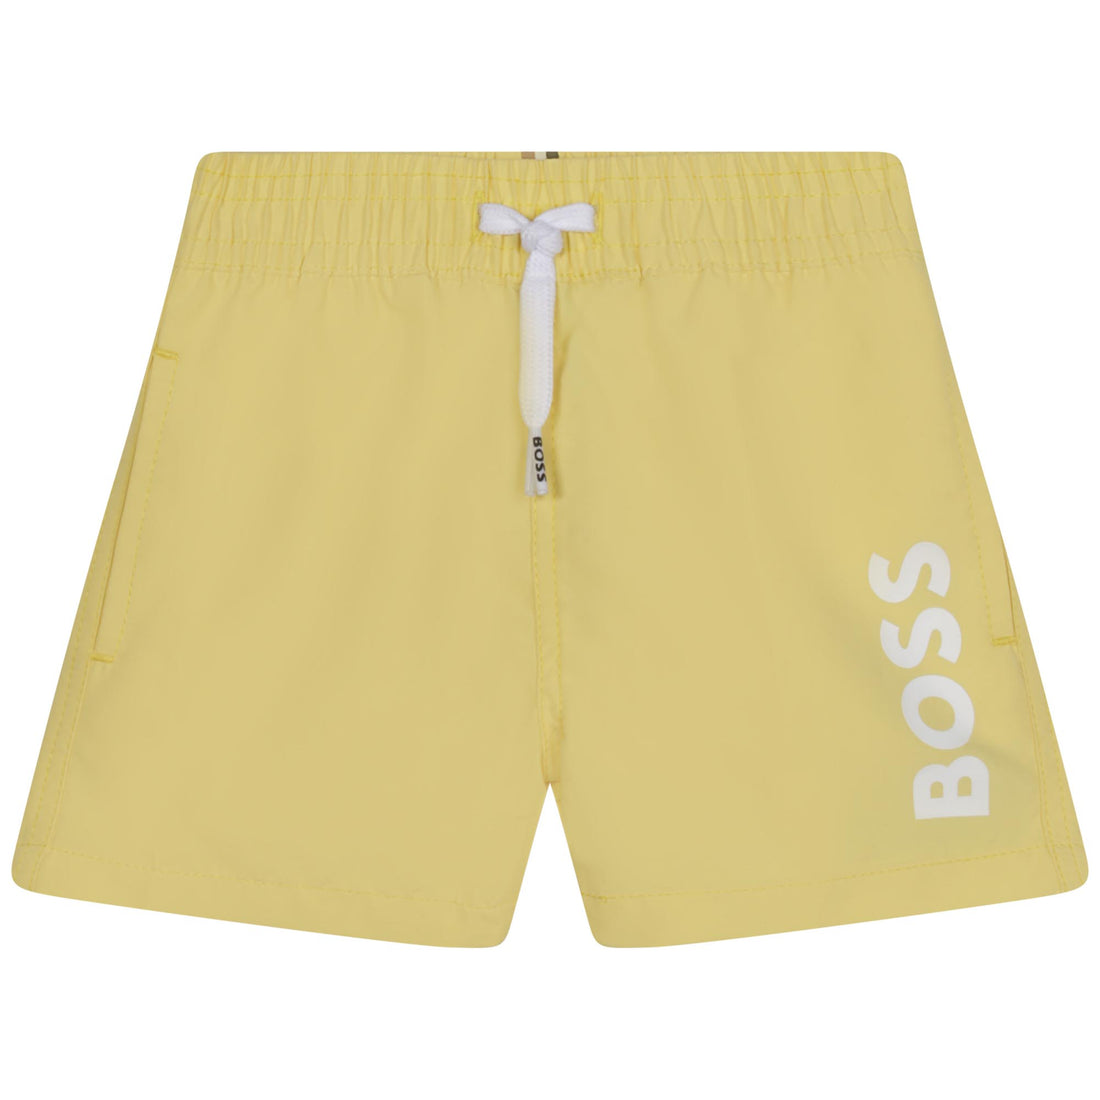 Hugo Boss Swim Shorts Style: J04472